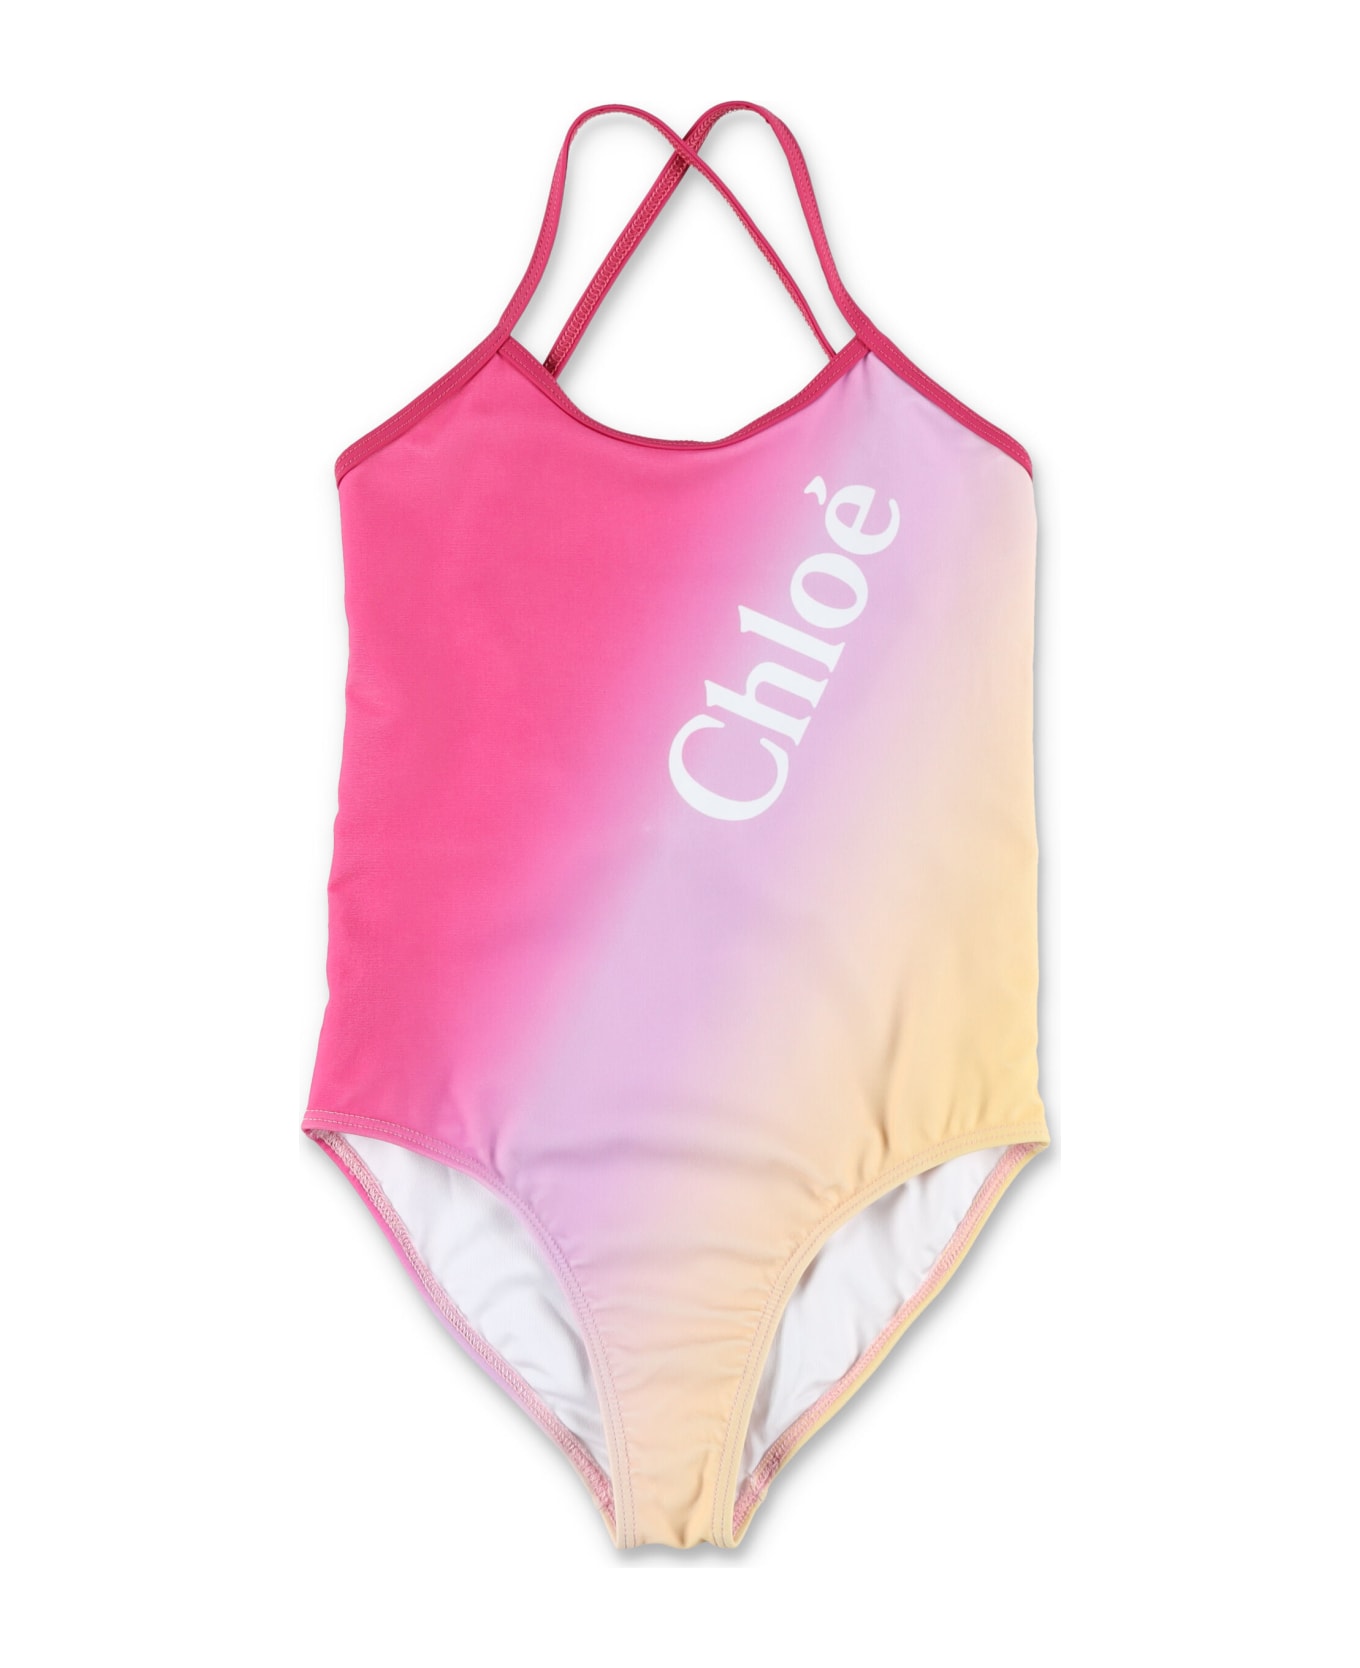 Chloé Logo One-piece Swimsuit - PINK 水着